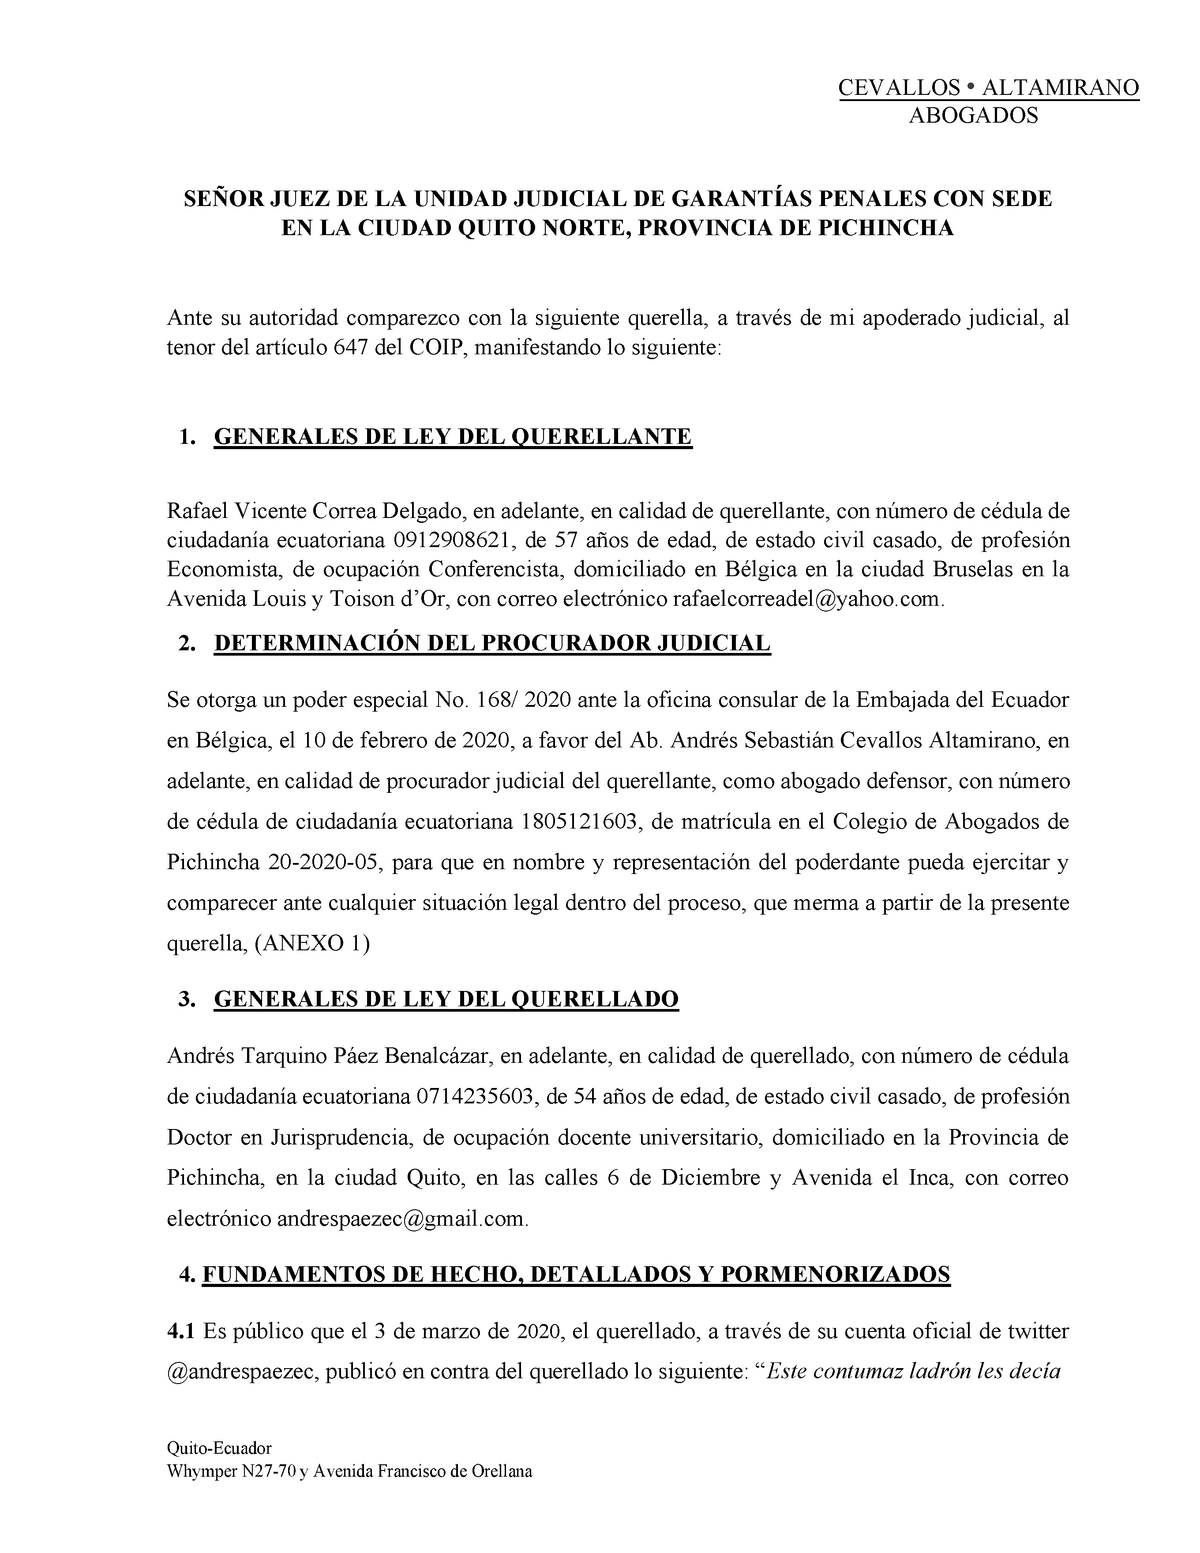 Querella por delito de calumnia - Warning: TT: undefined function: 32  ABOGADOS Quito-Ecuador SEÑOR - Studocu